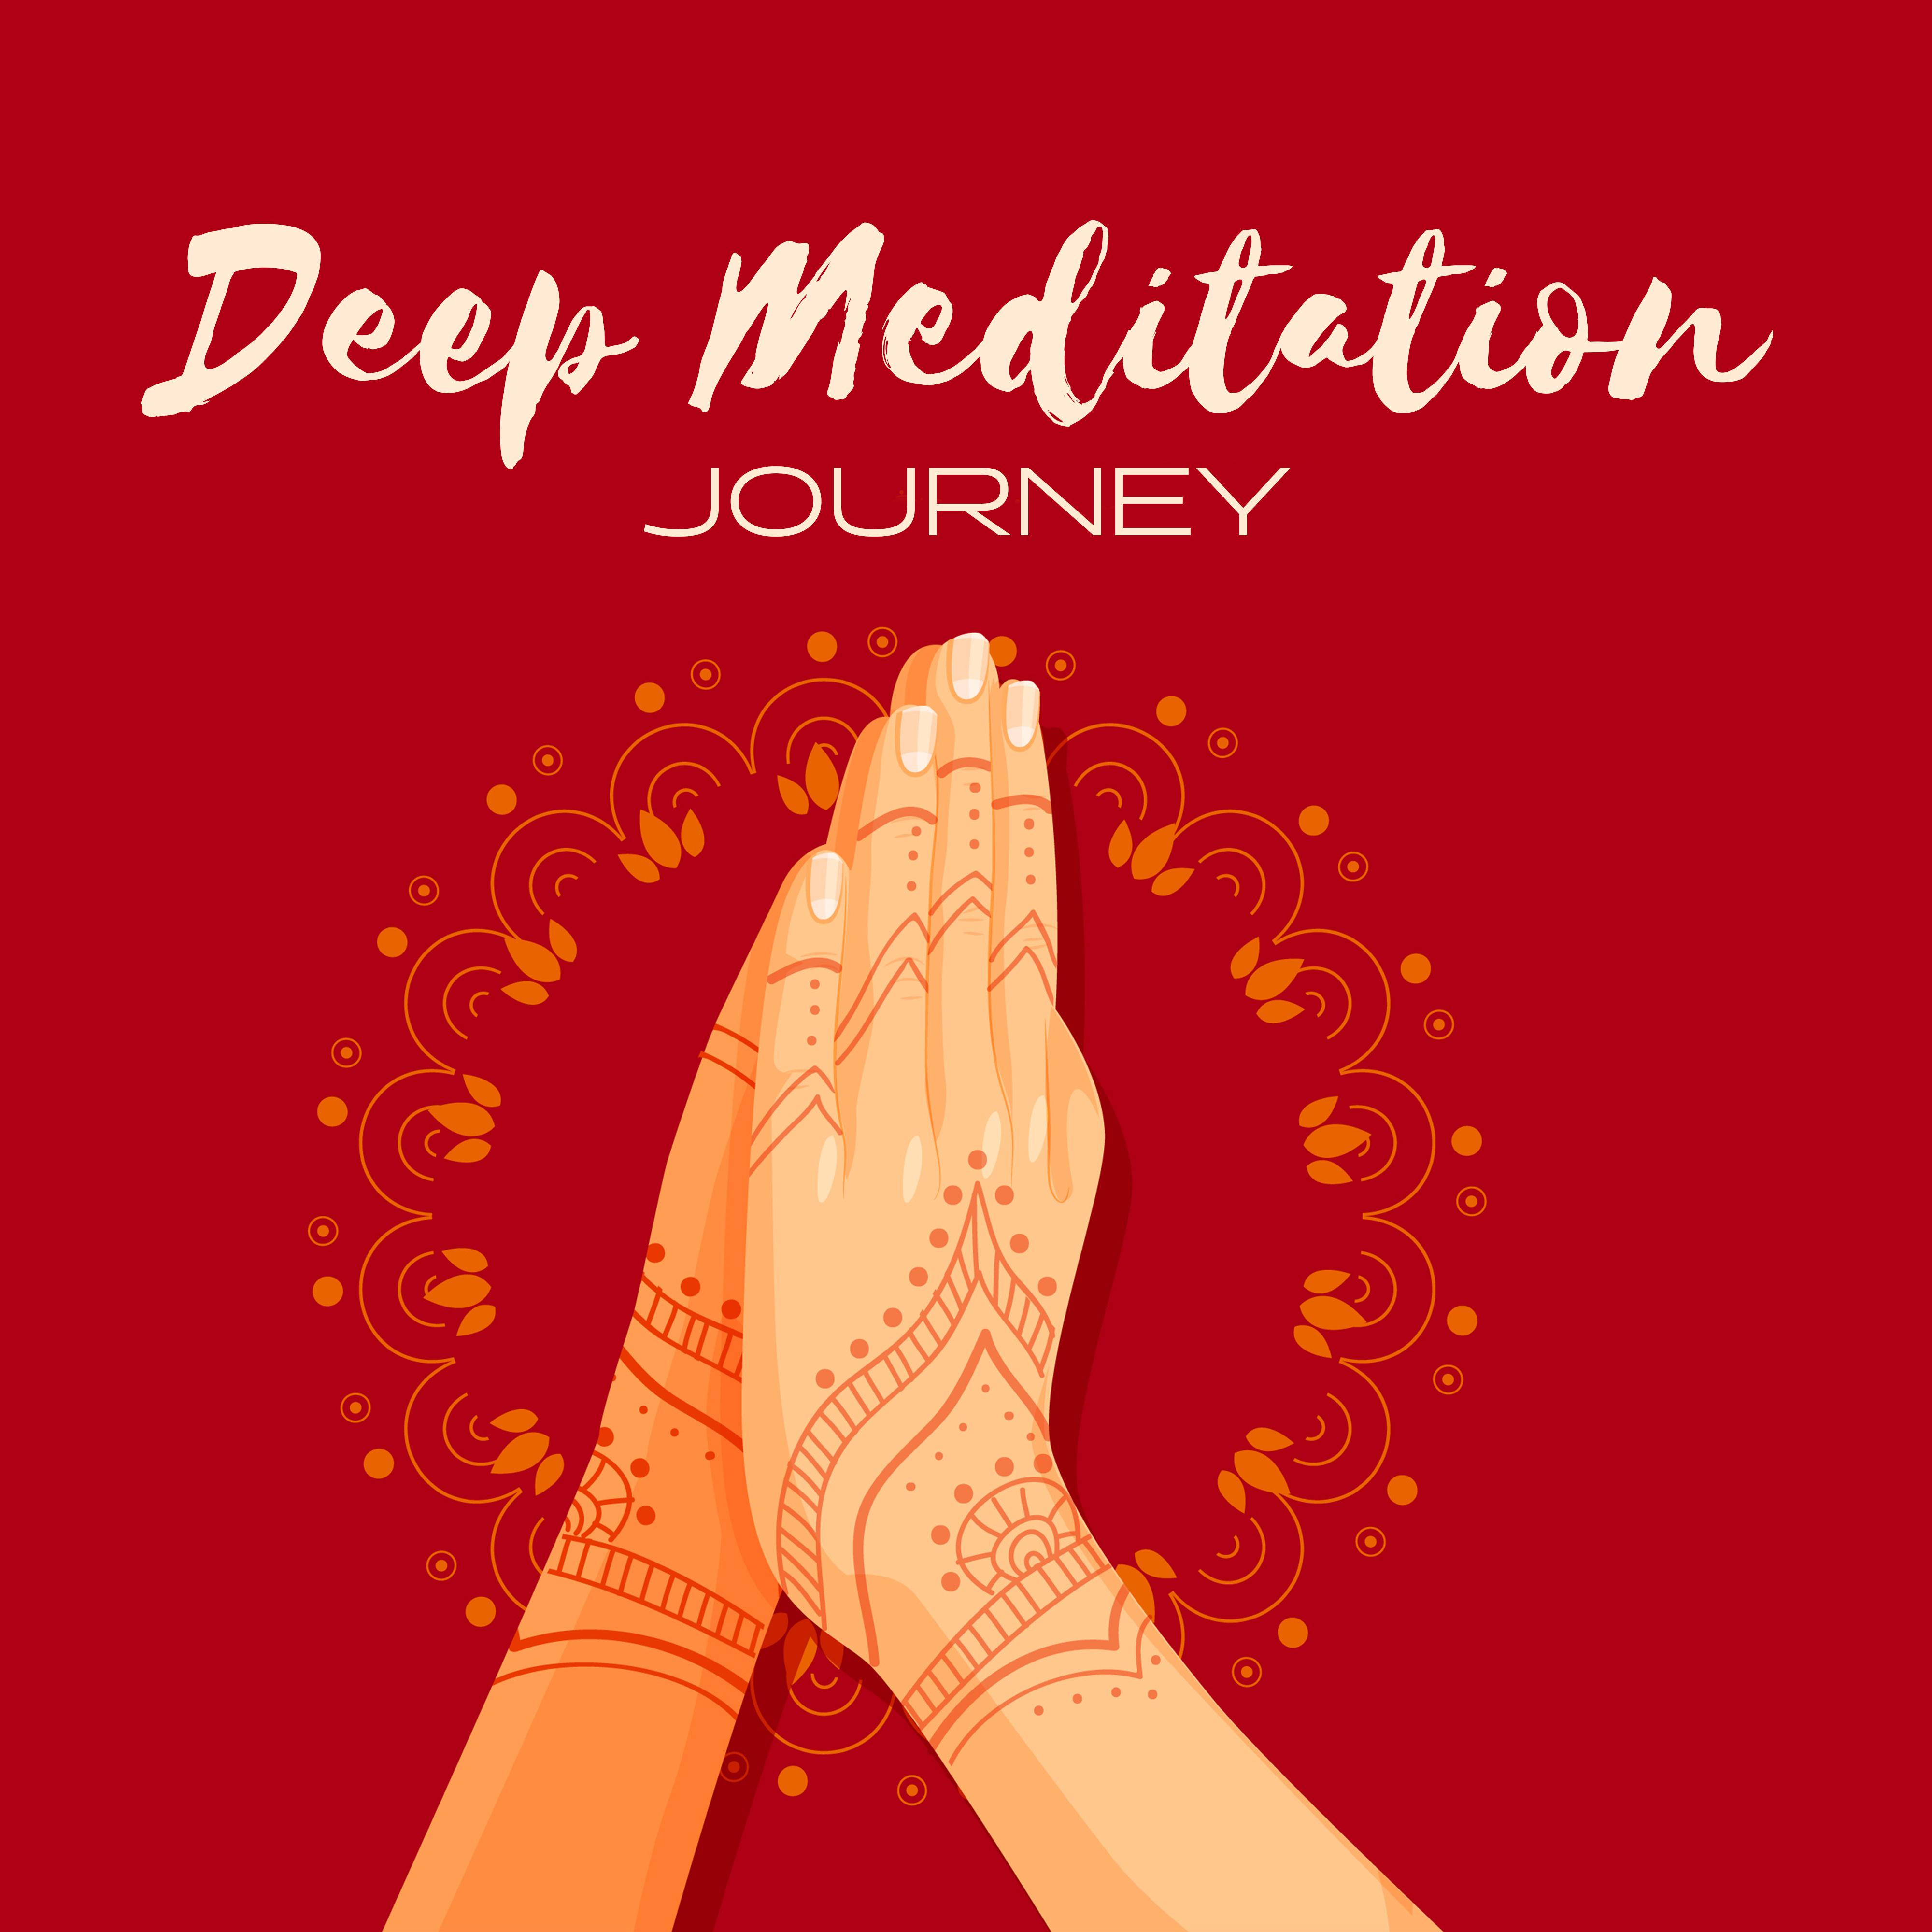 Deep Meditation Journey